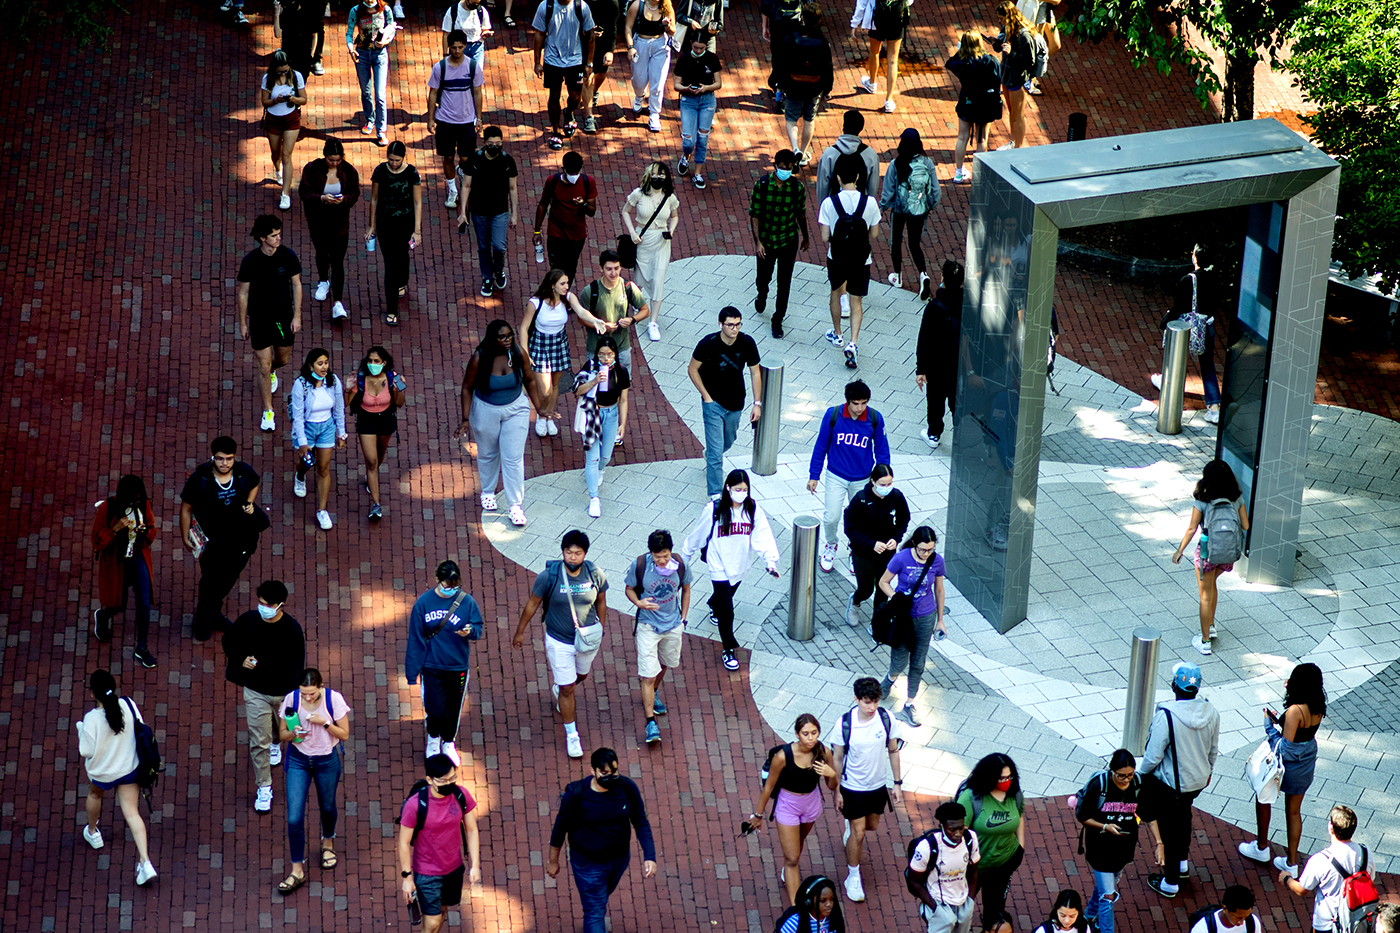 students walk through campus